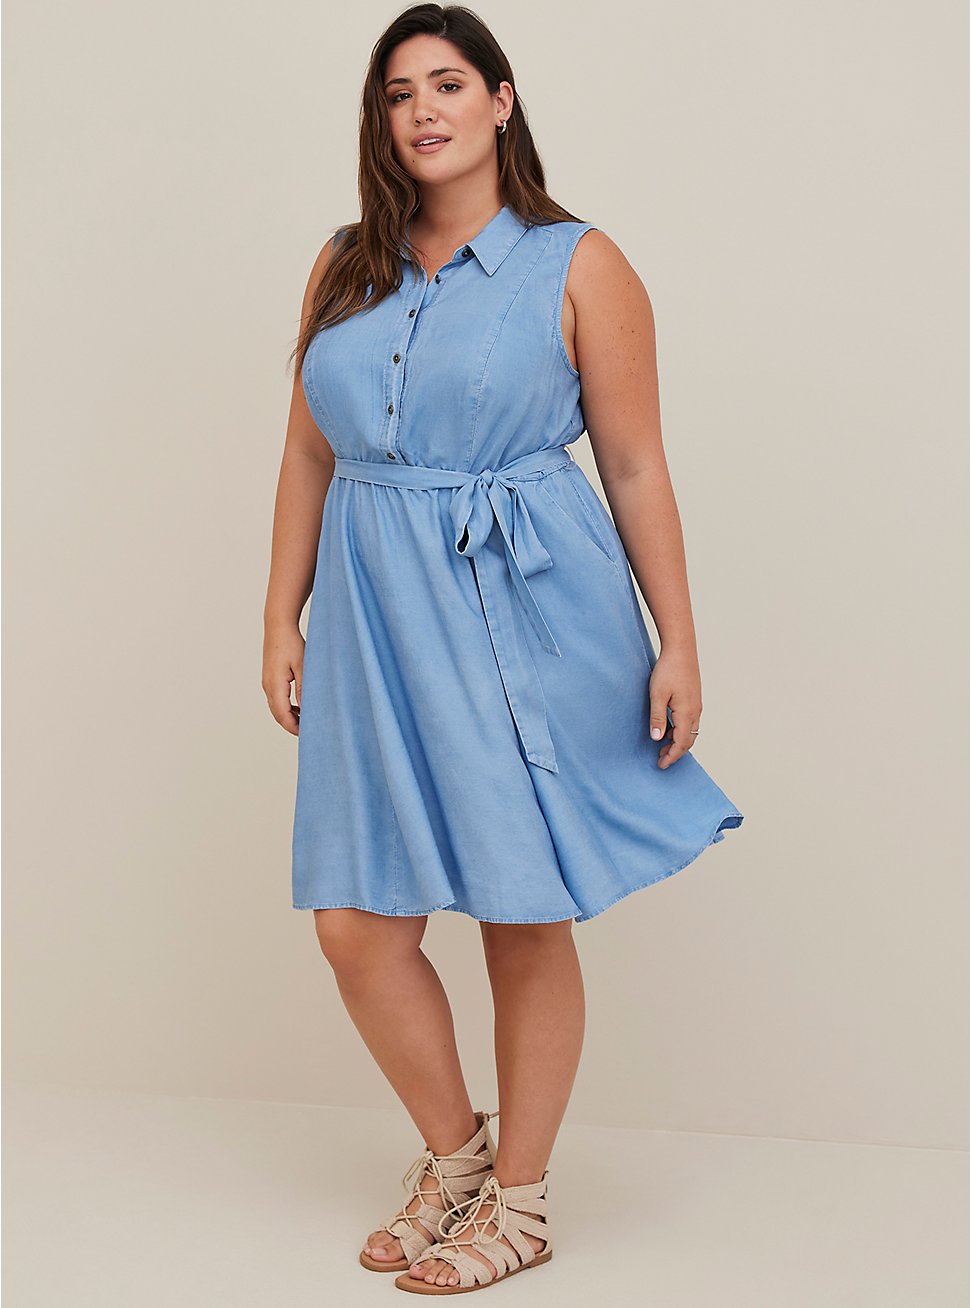 Plus Size Collared Shirt Dress - Chambray Blue, MEDIUM WASH, hi-res